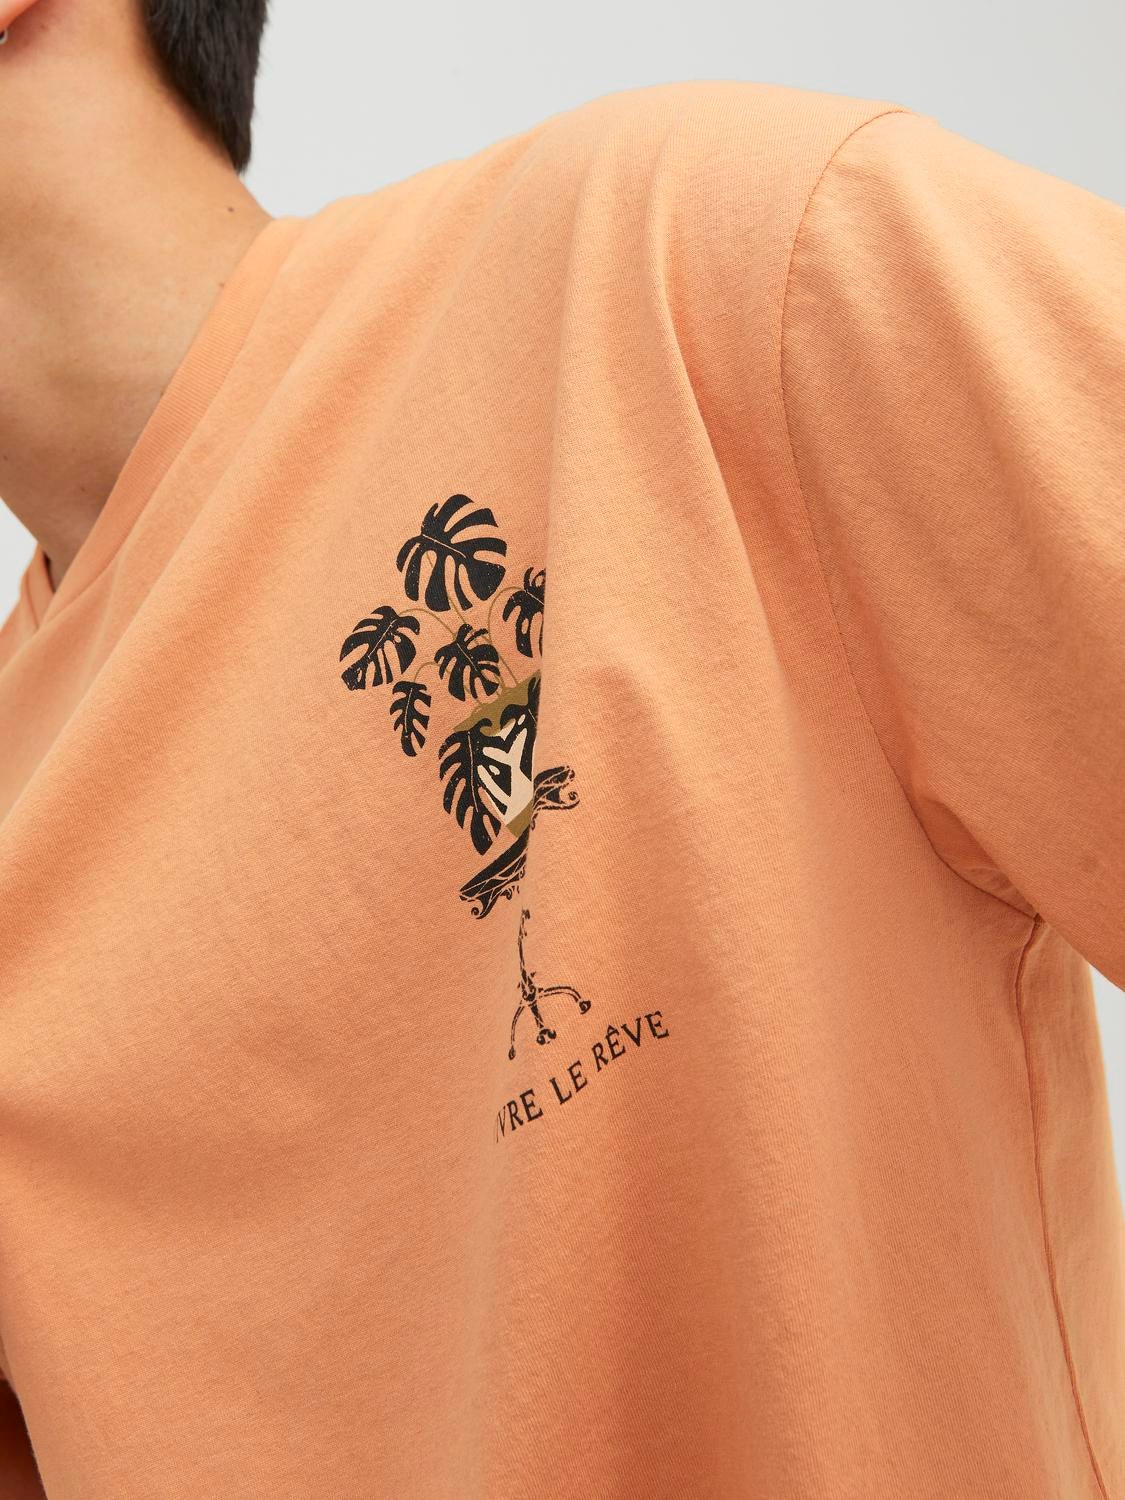 Jack & Jones Printet Crew neck T-shirt -Copper Tan - 12245262